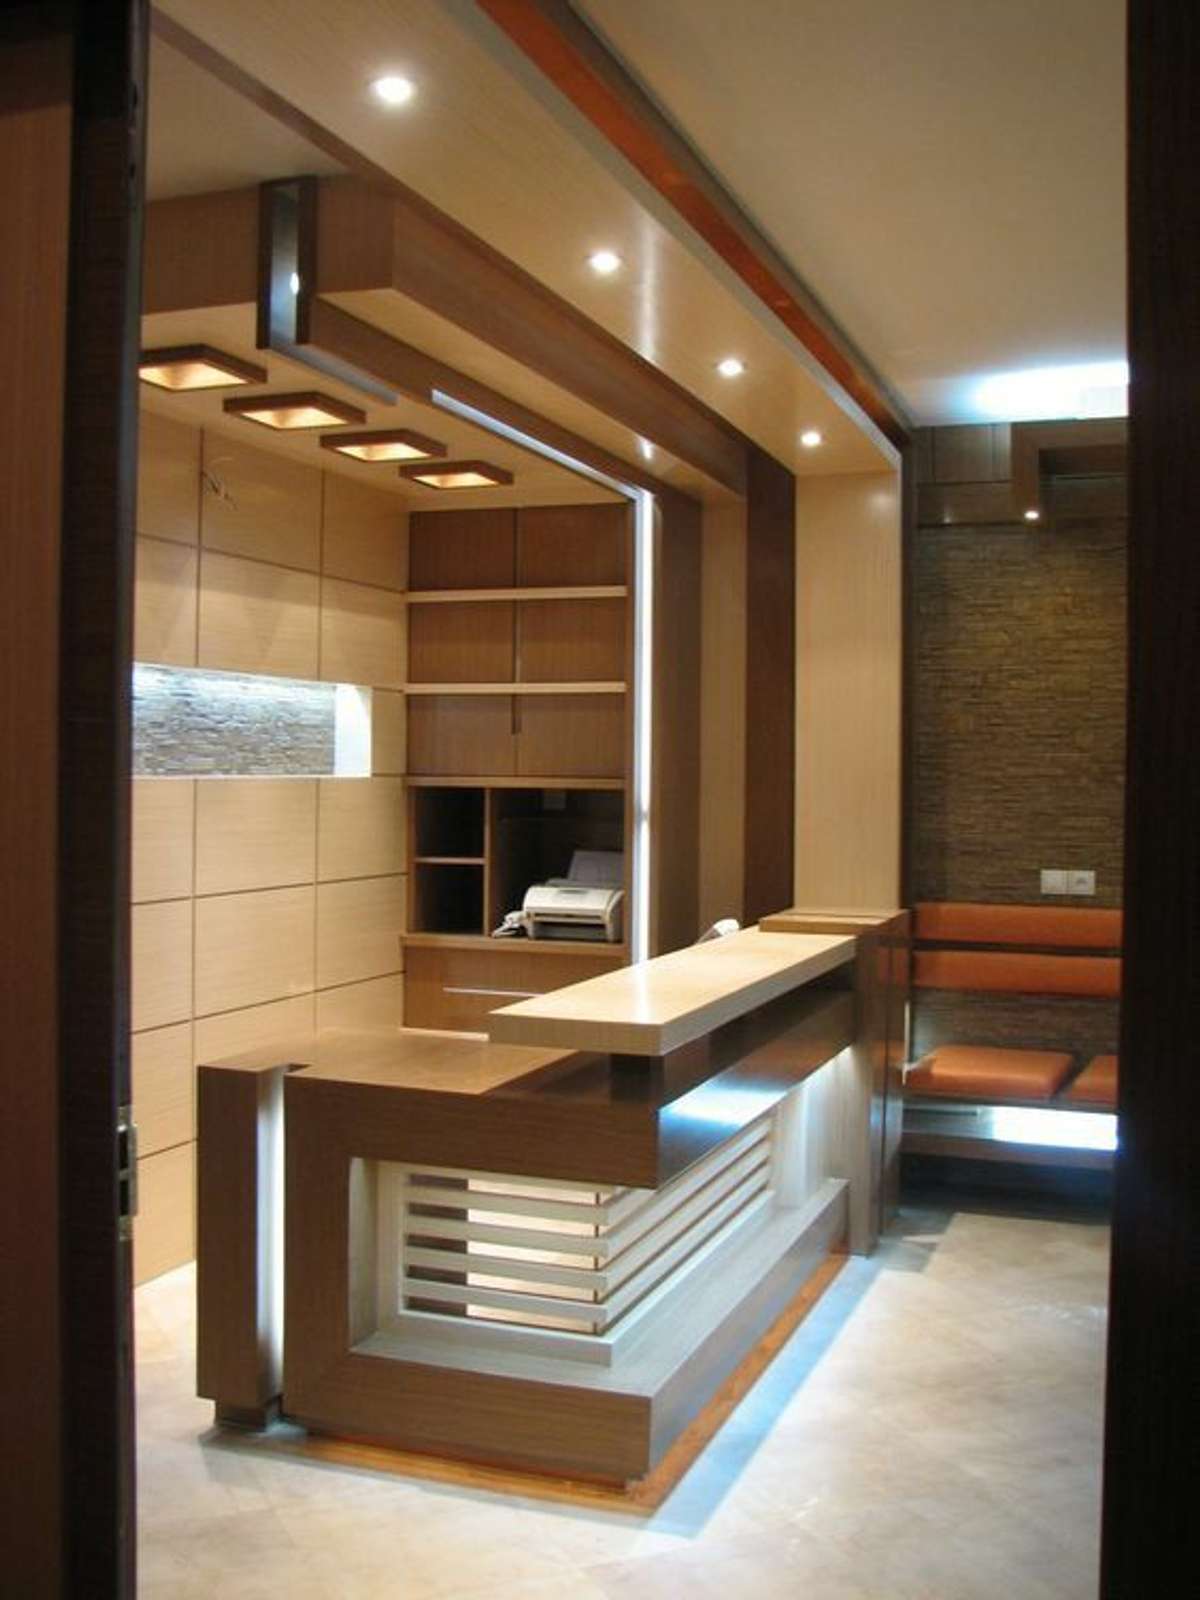 #  # #KitchenIdeas 
contact me interior design Carpenter work in all Kerala
+917994049330